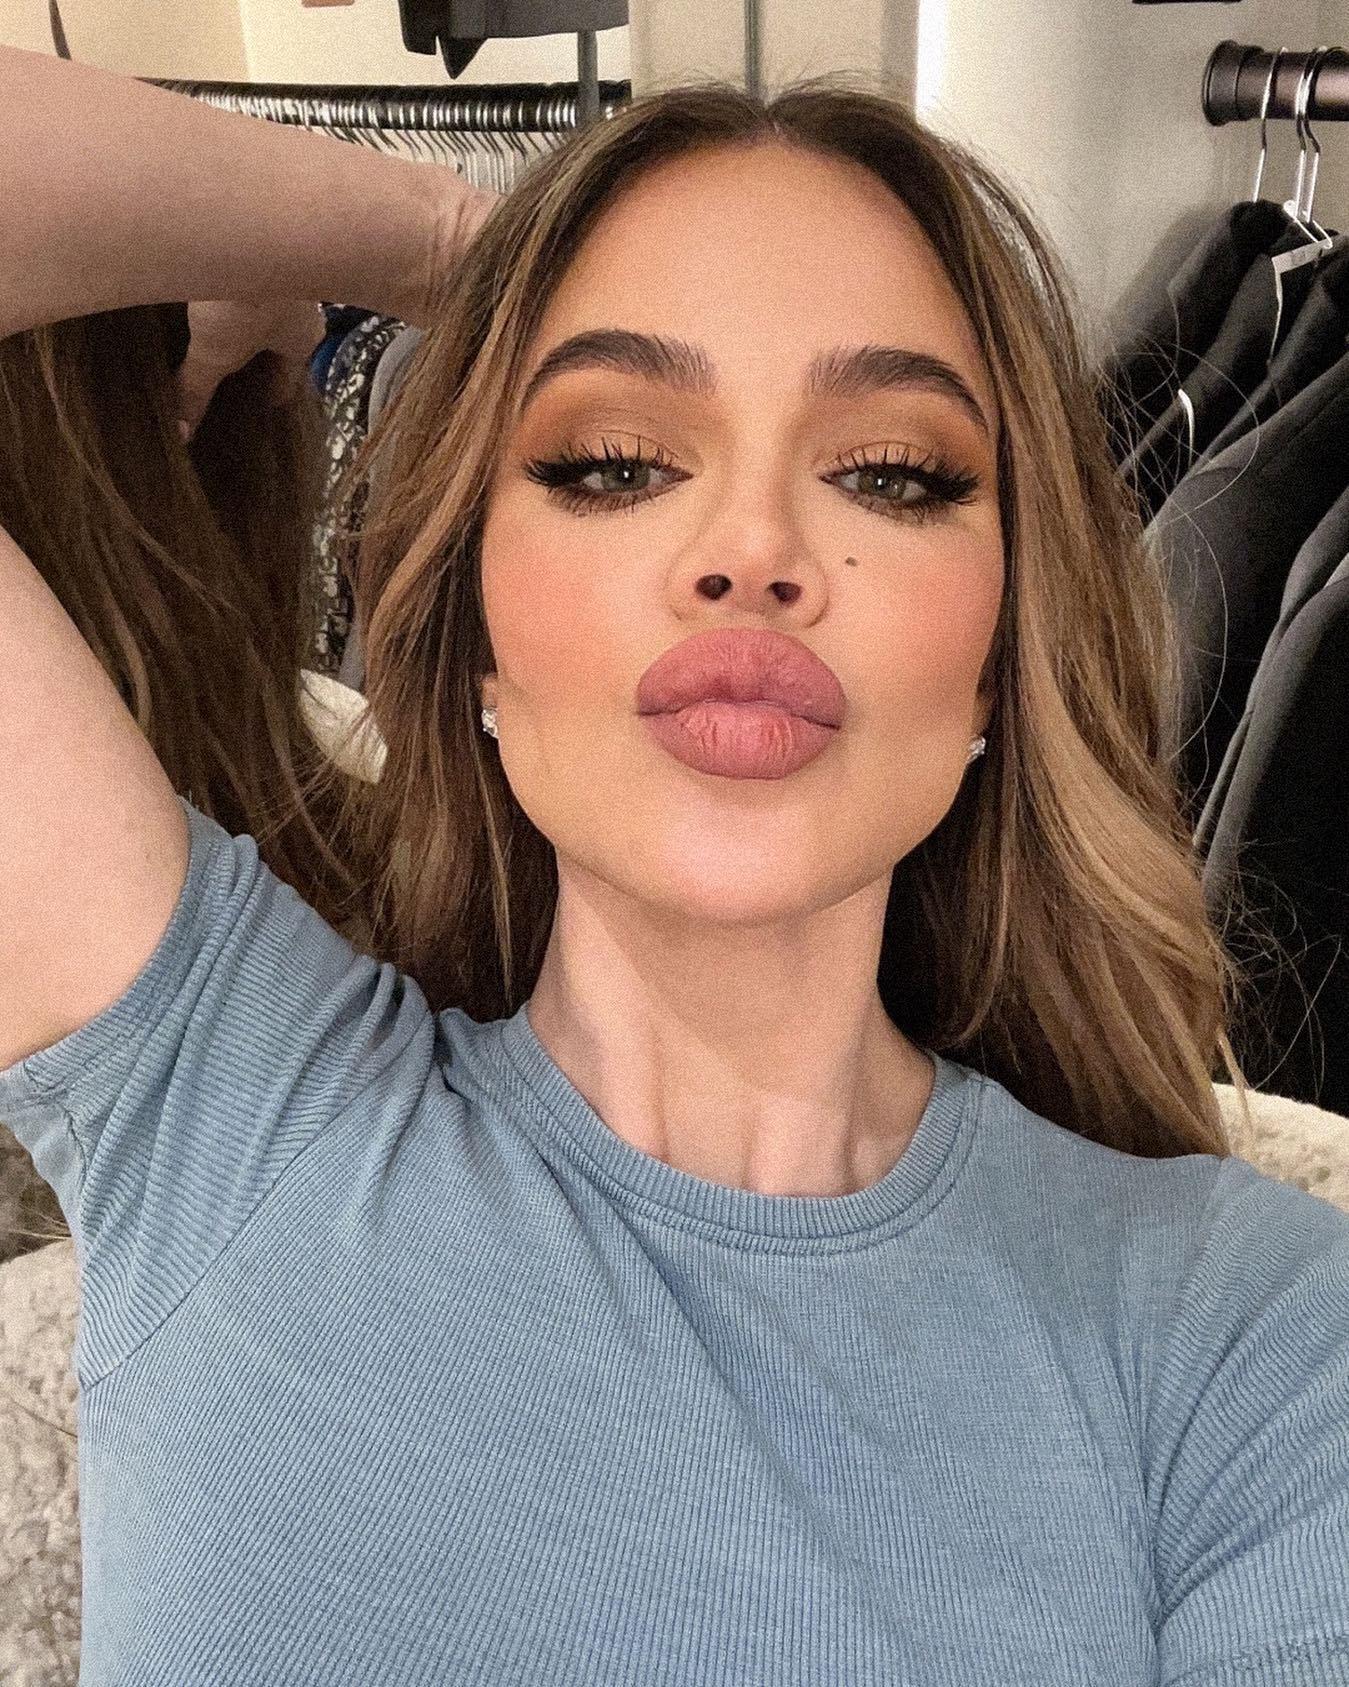 Khloe Kardashian shows off her duck lips